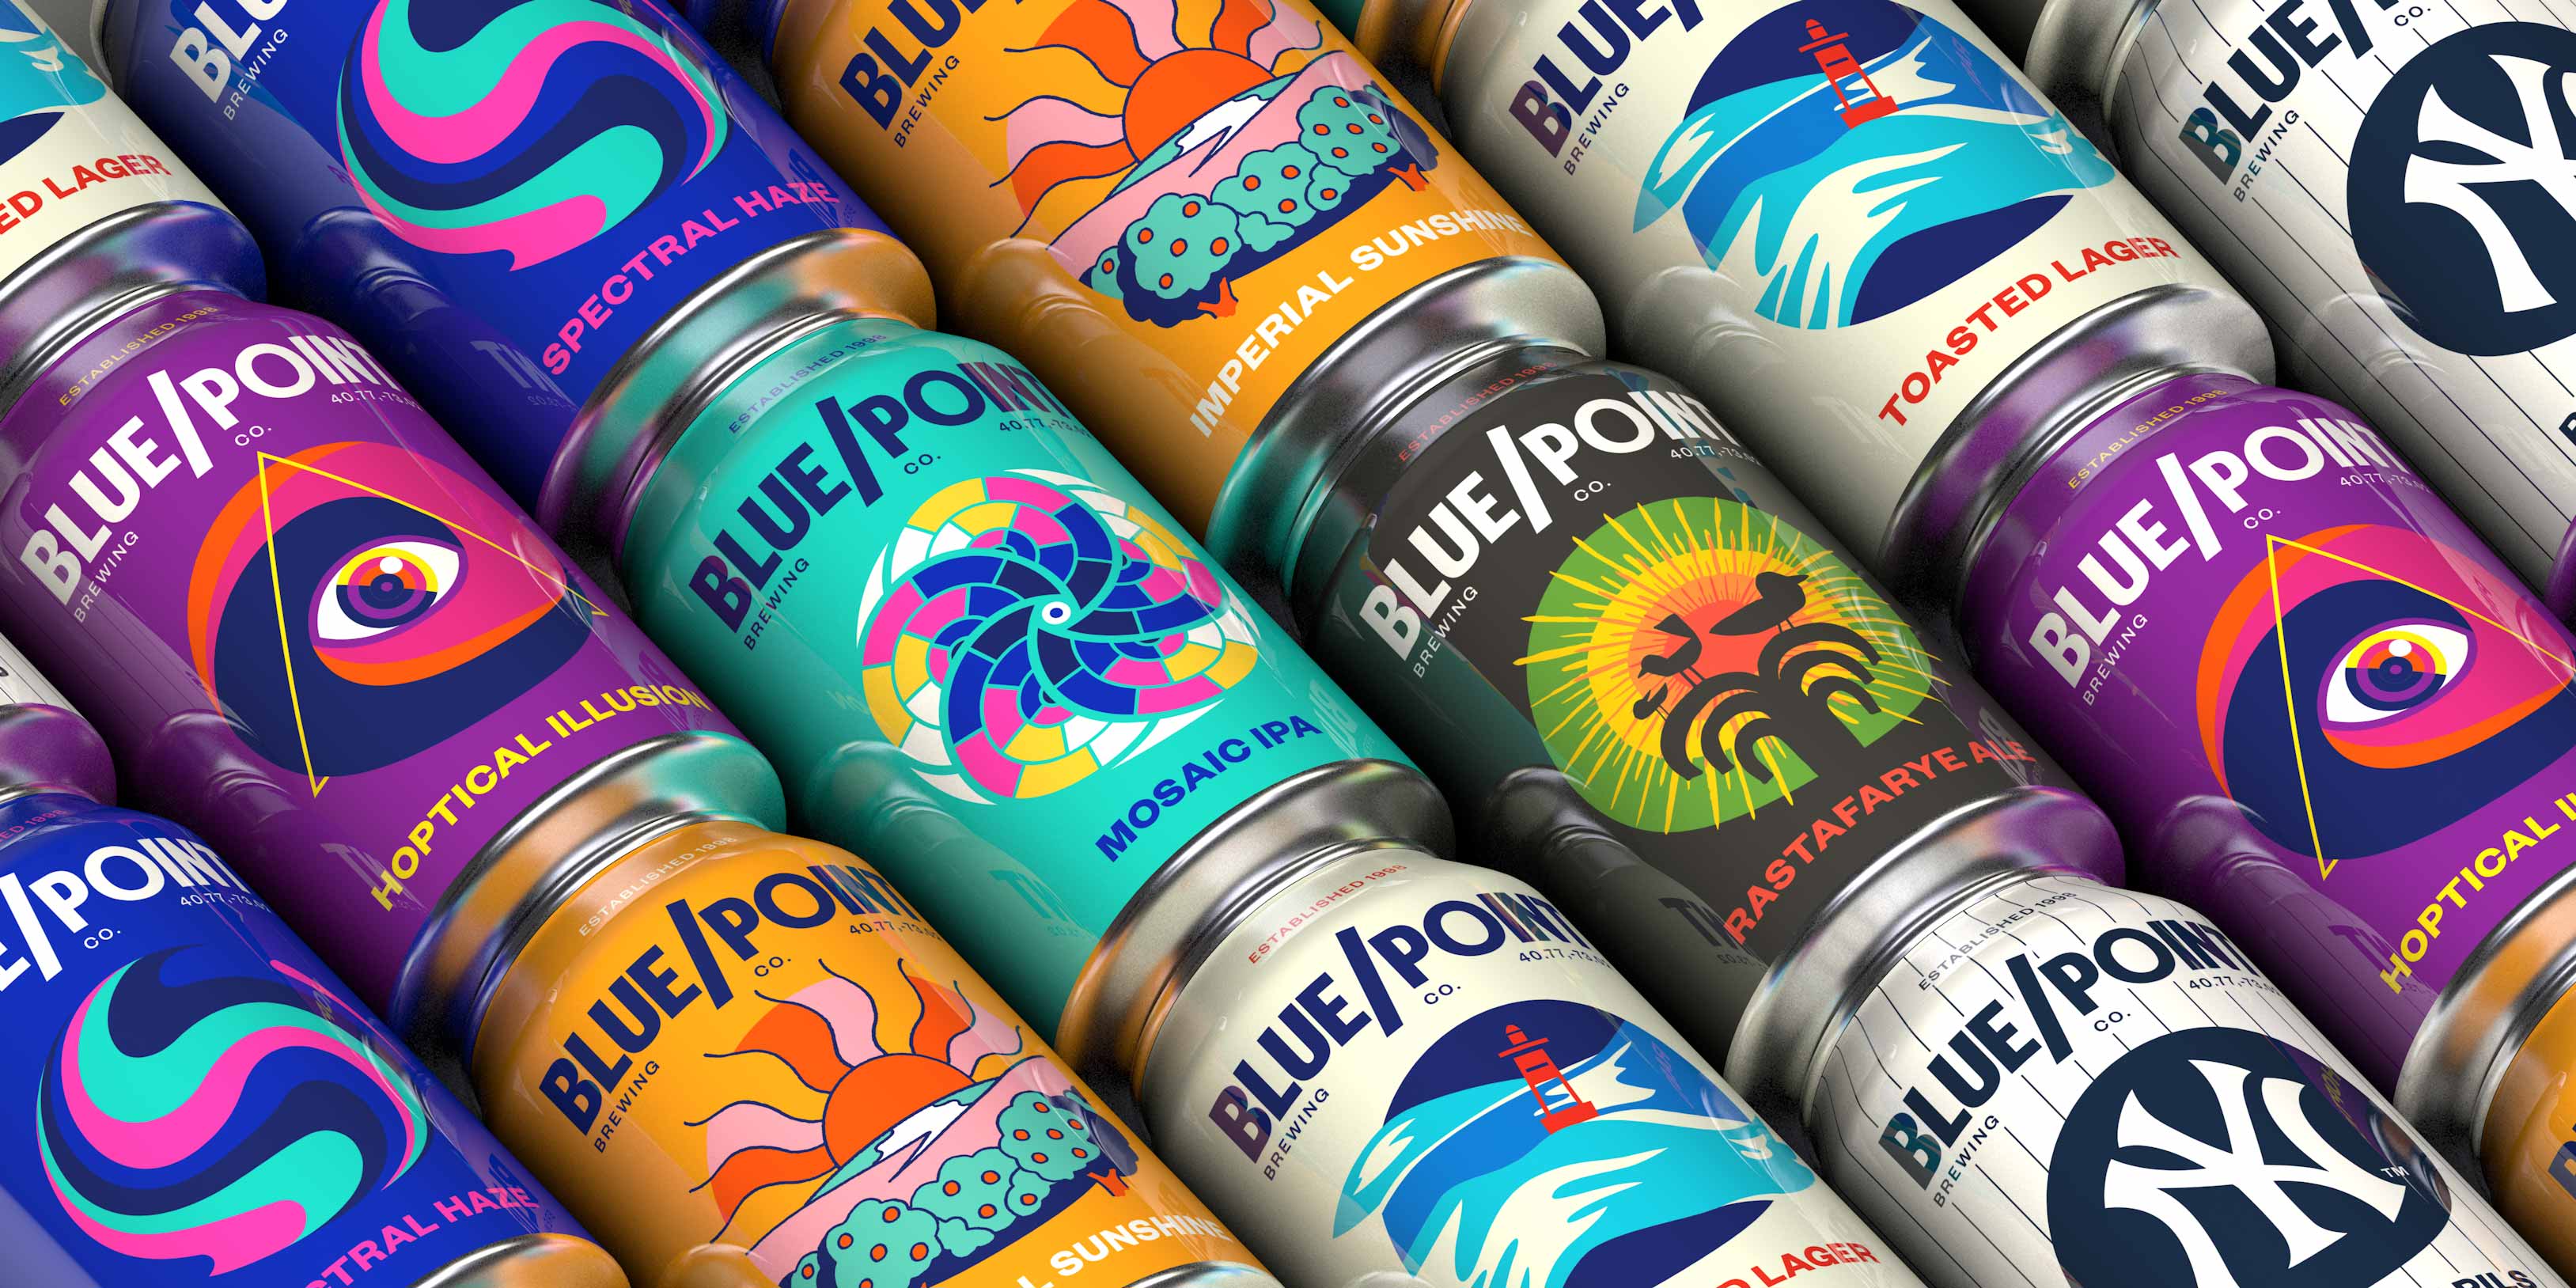 Blue Point精酿啤酒产品设计 欣赏一组国外精酿啤酒外包装设计